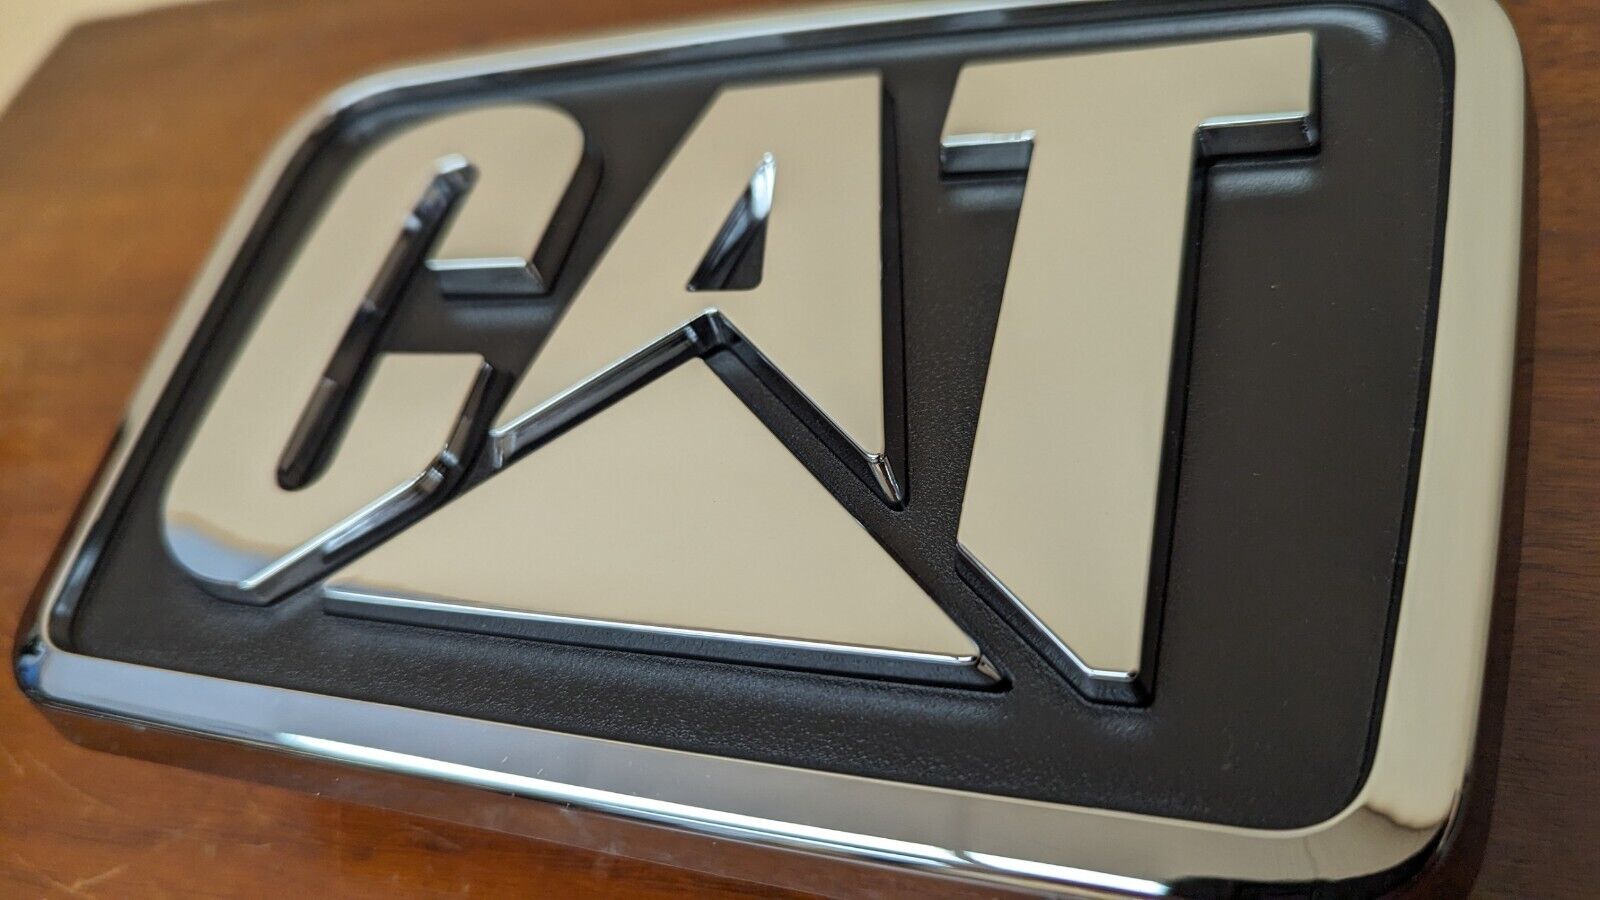 Caterpillar CAT Truck Hood Emblem 8 1/2 x 5 1/2 CT630 Raised Letters New Grille